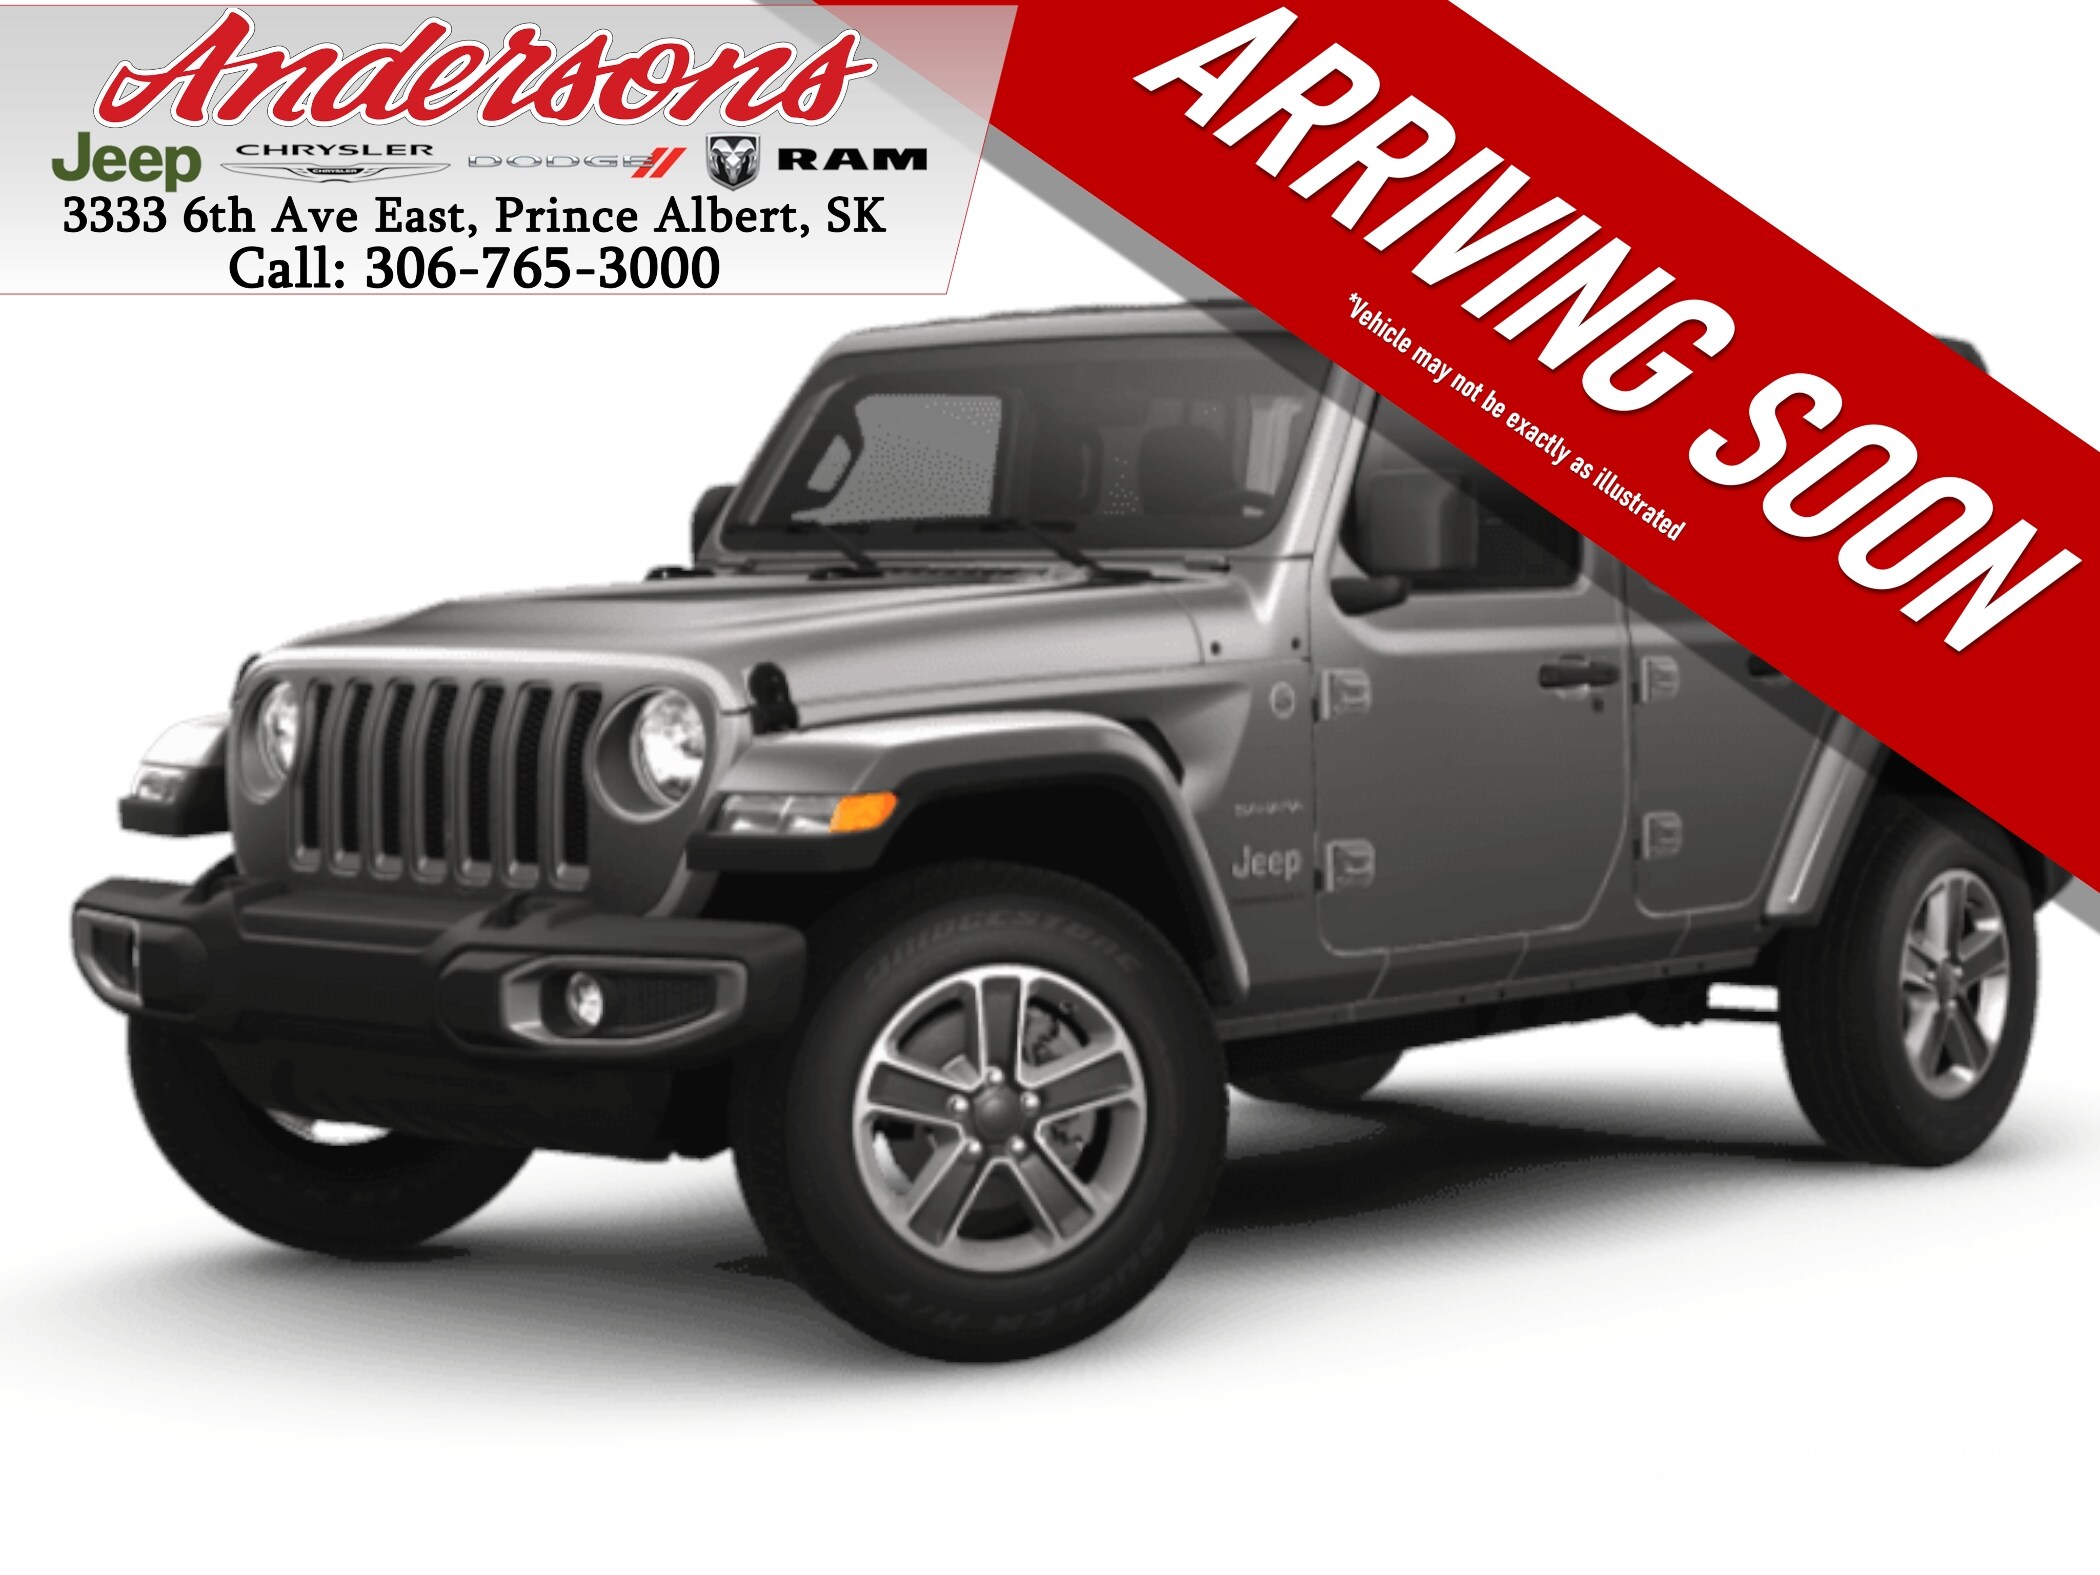 Jeep Wrangler for Sale in Saskatchewan | Anderson Chrysler